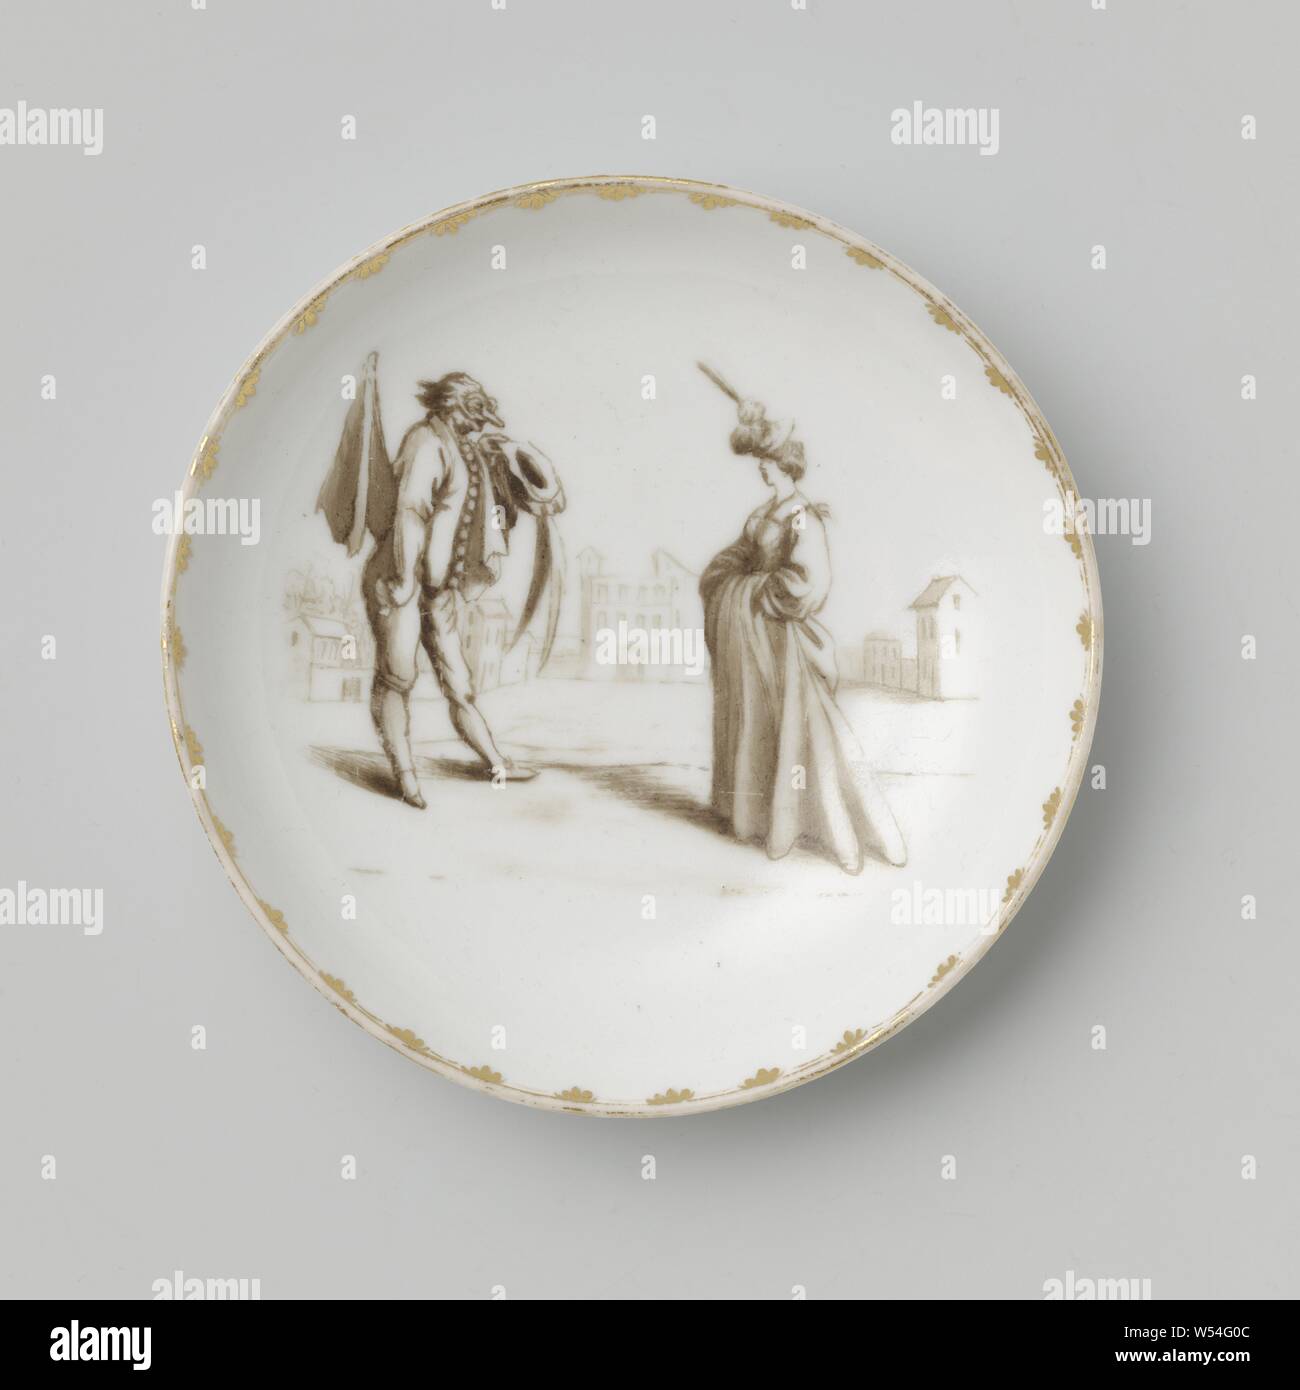 Saucer with Cap. Ceremonia and Lavinia, Porcelain saucer. Painted in brown with two figures Cap. Ceremonia and Lavinia., Manufactuur Oud-Loosdrecht, Loosdrecht, 1774 - 1784, porcelain (material), h 2.6 cm × d 12.2 cm Stock Photo